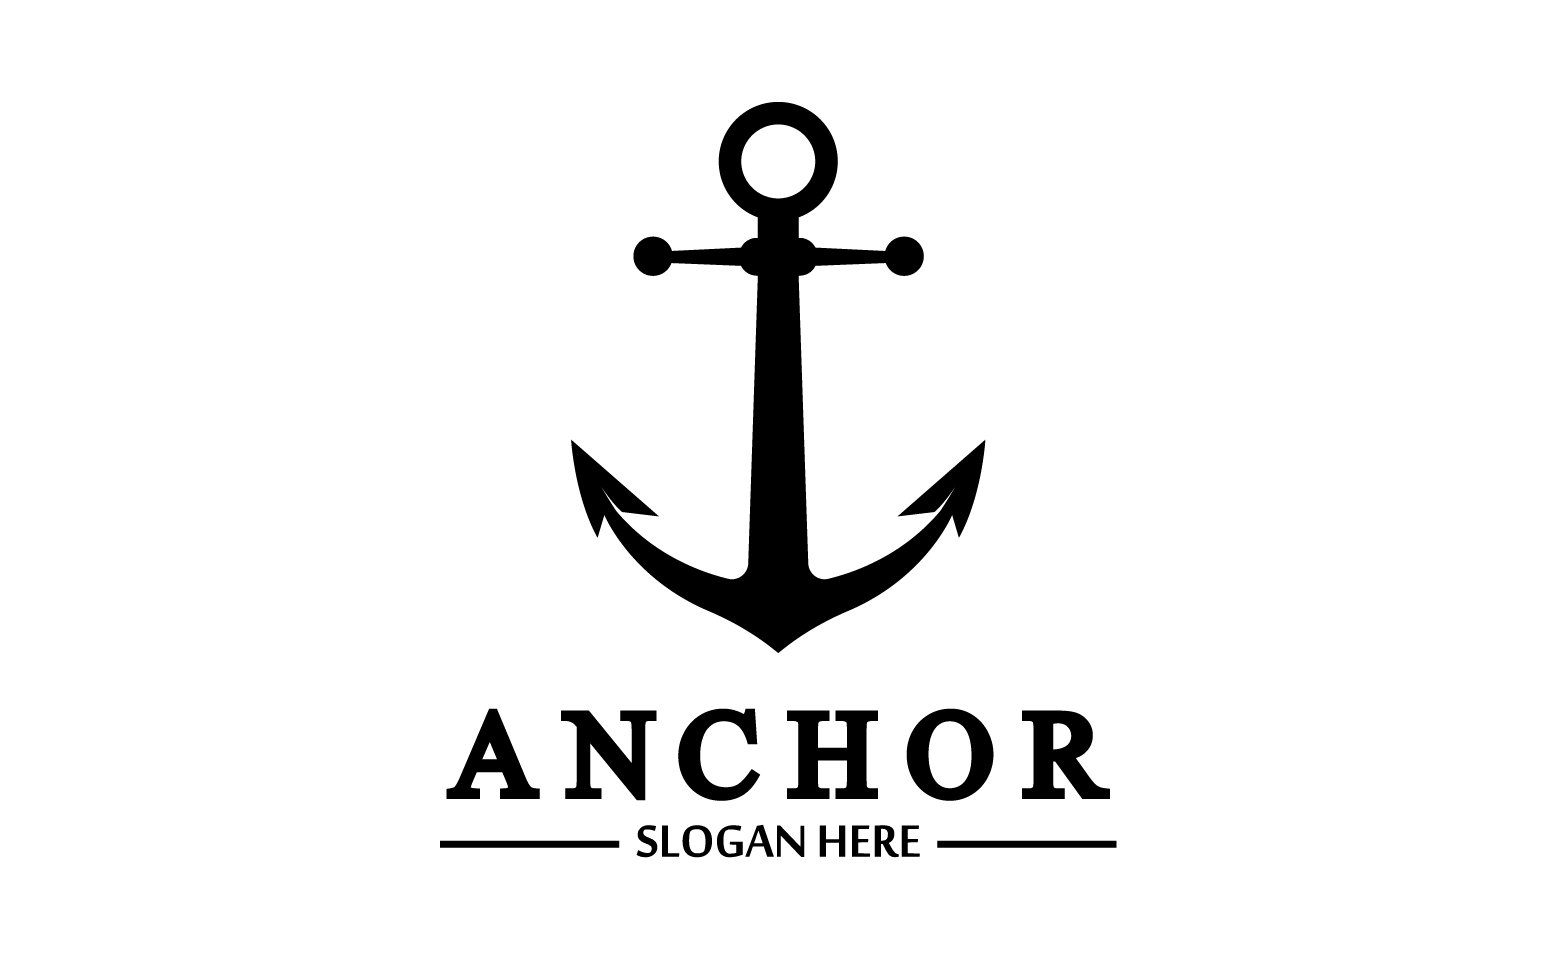 Anchor marine icon graphic symbol version 21